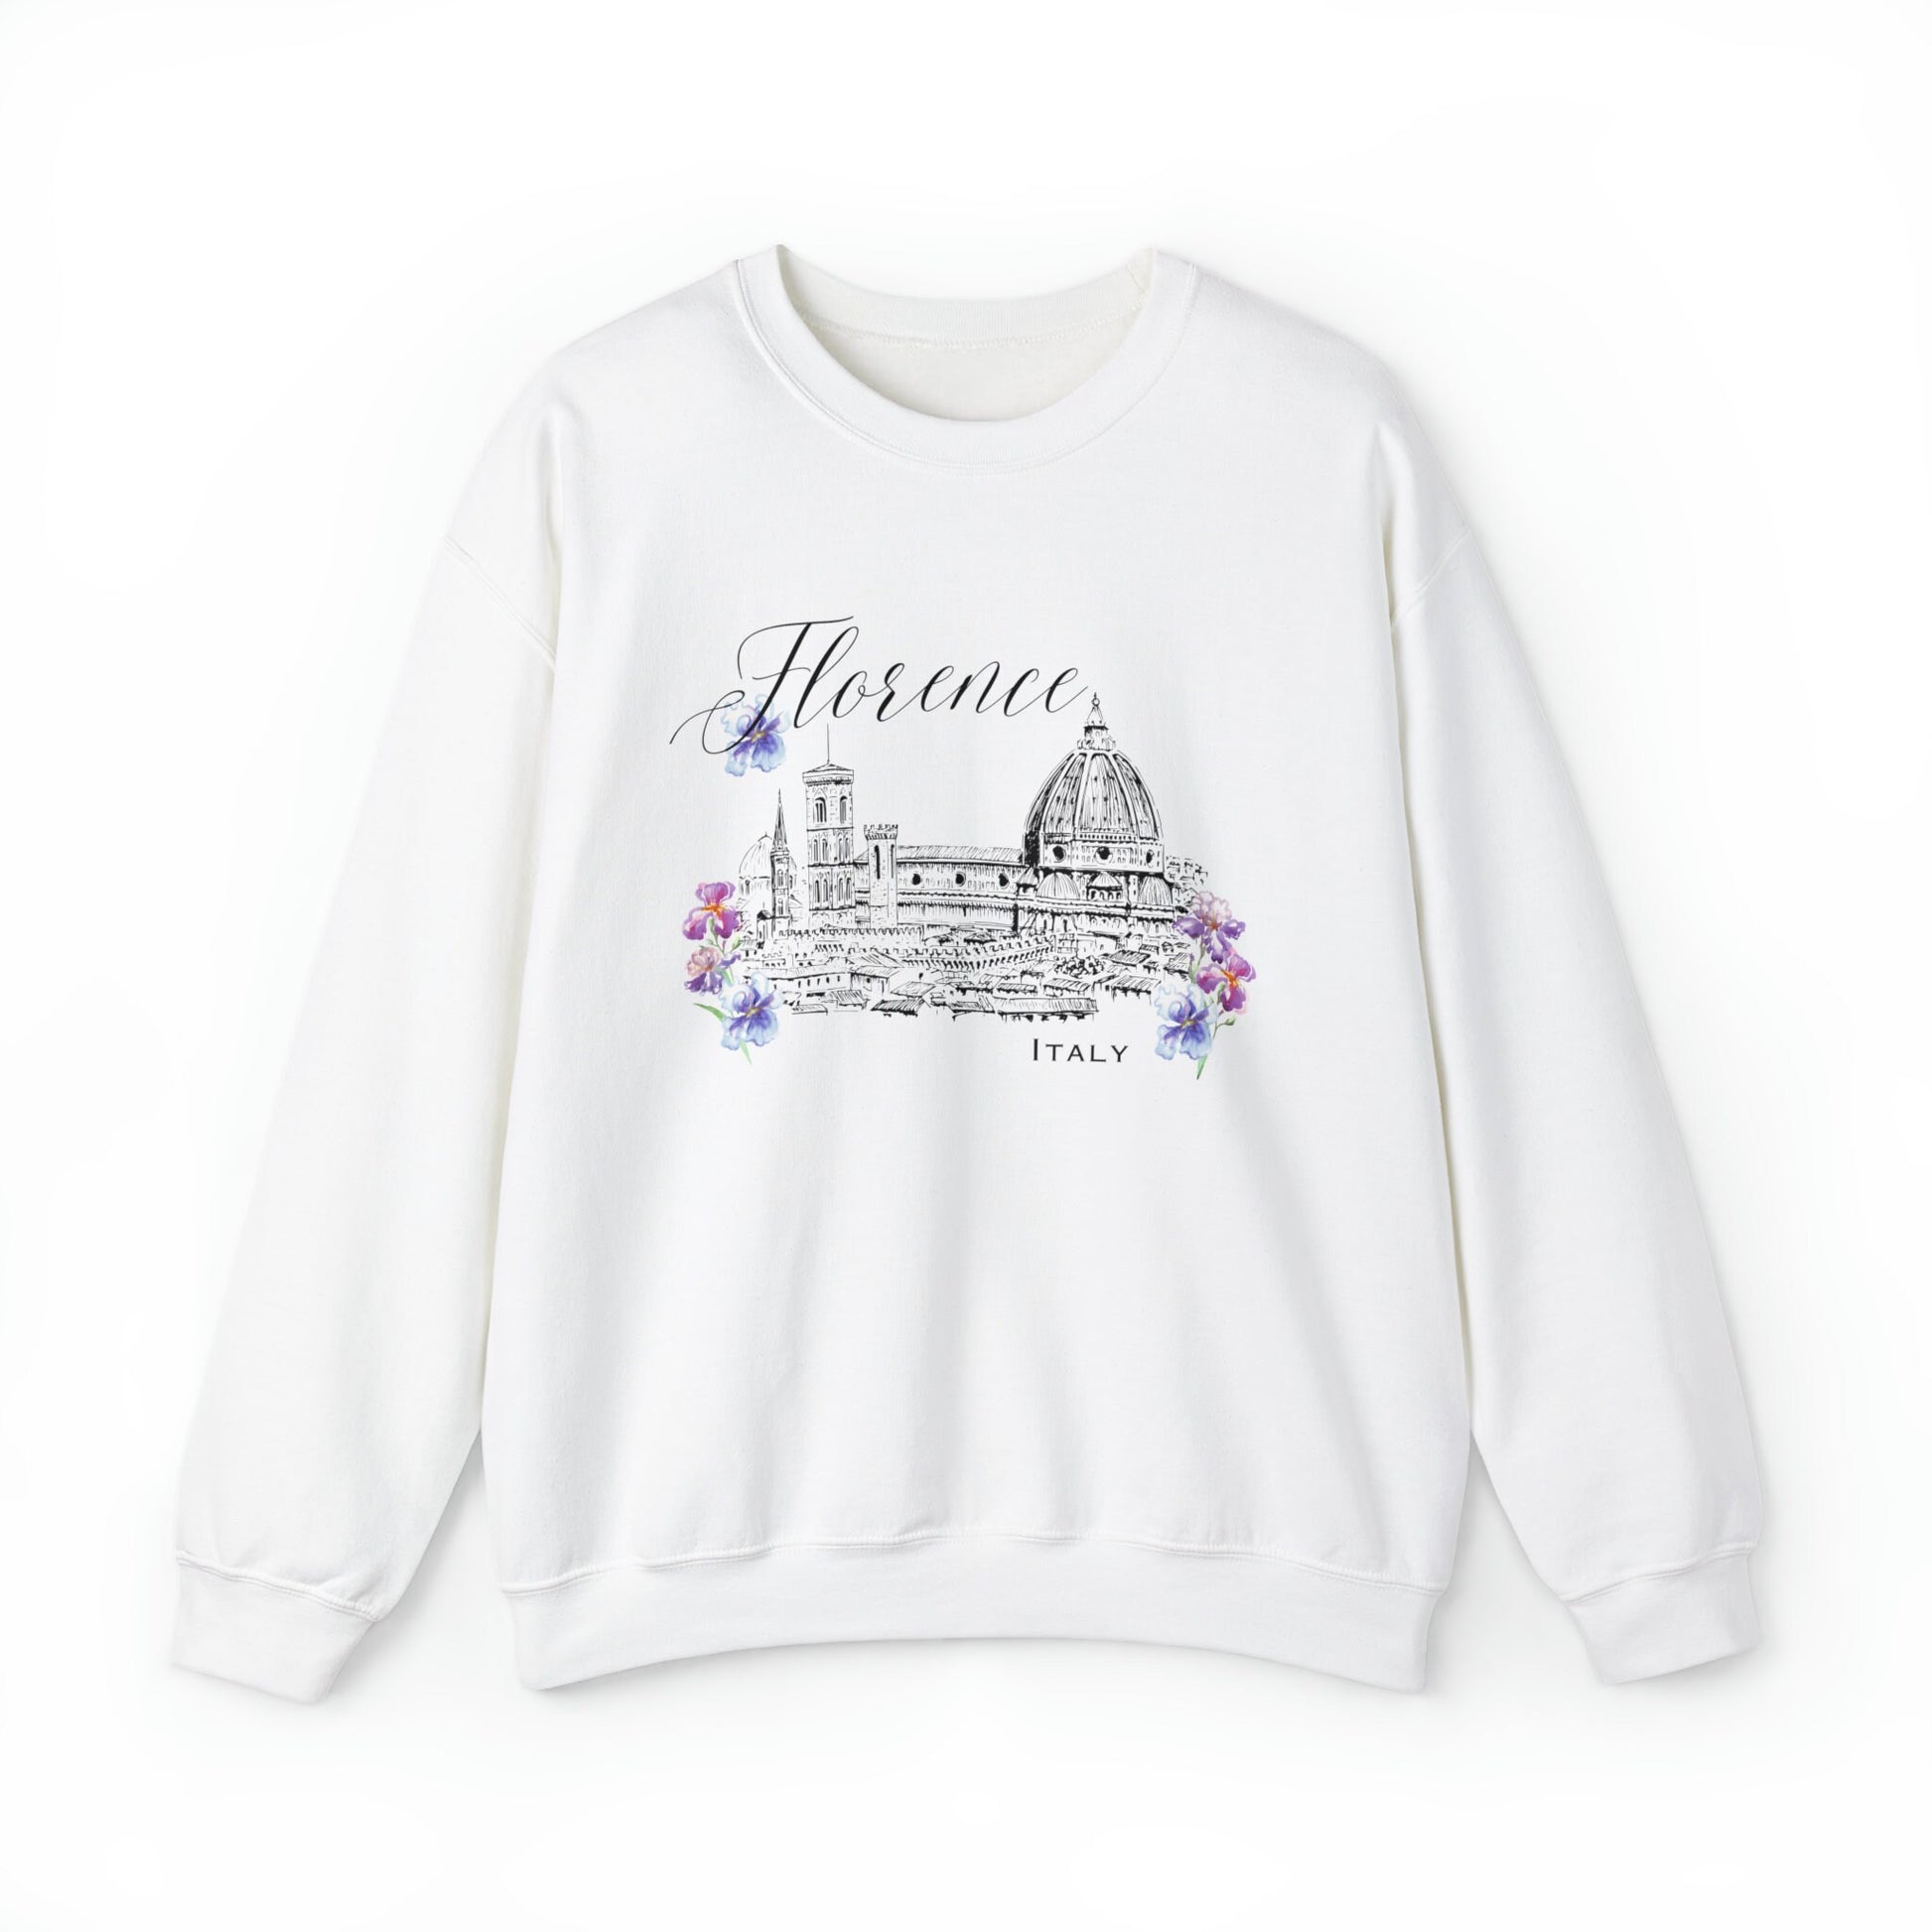 Florence Italy Sweatshirt, Travel Sweatshirt Italy Shirt Romantic Italian Aesthetic Light Academia Honeymoon Sweatshirt Wildflower Shirt